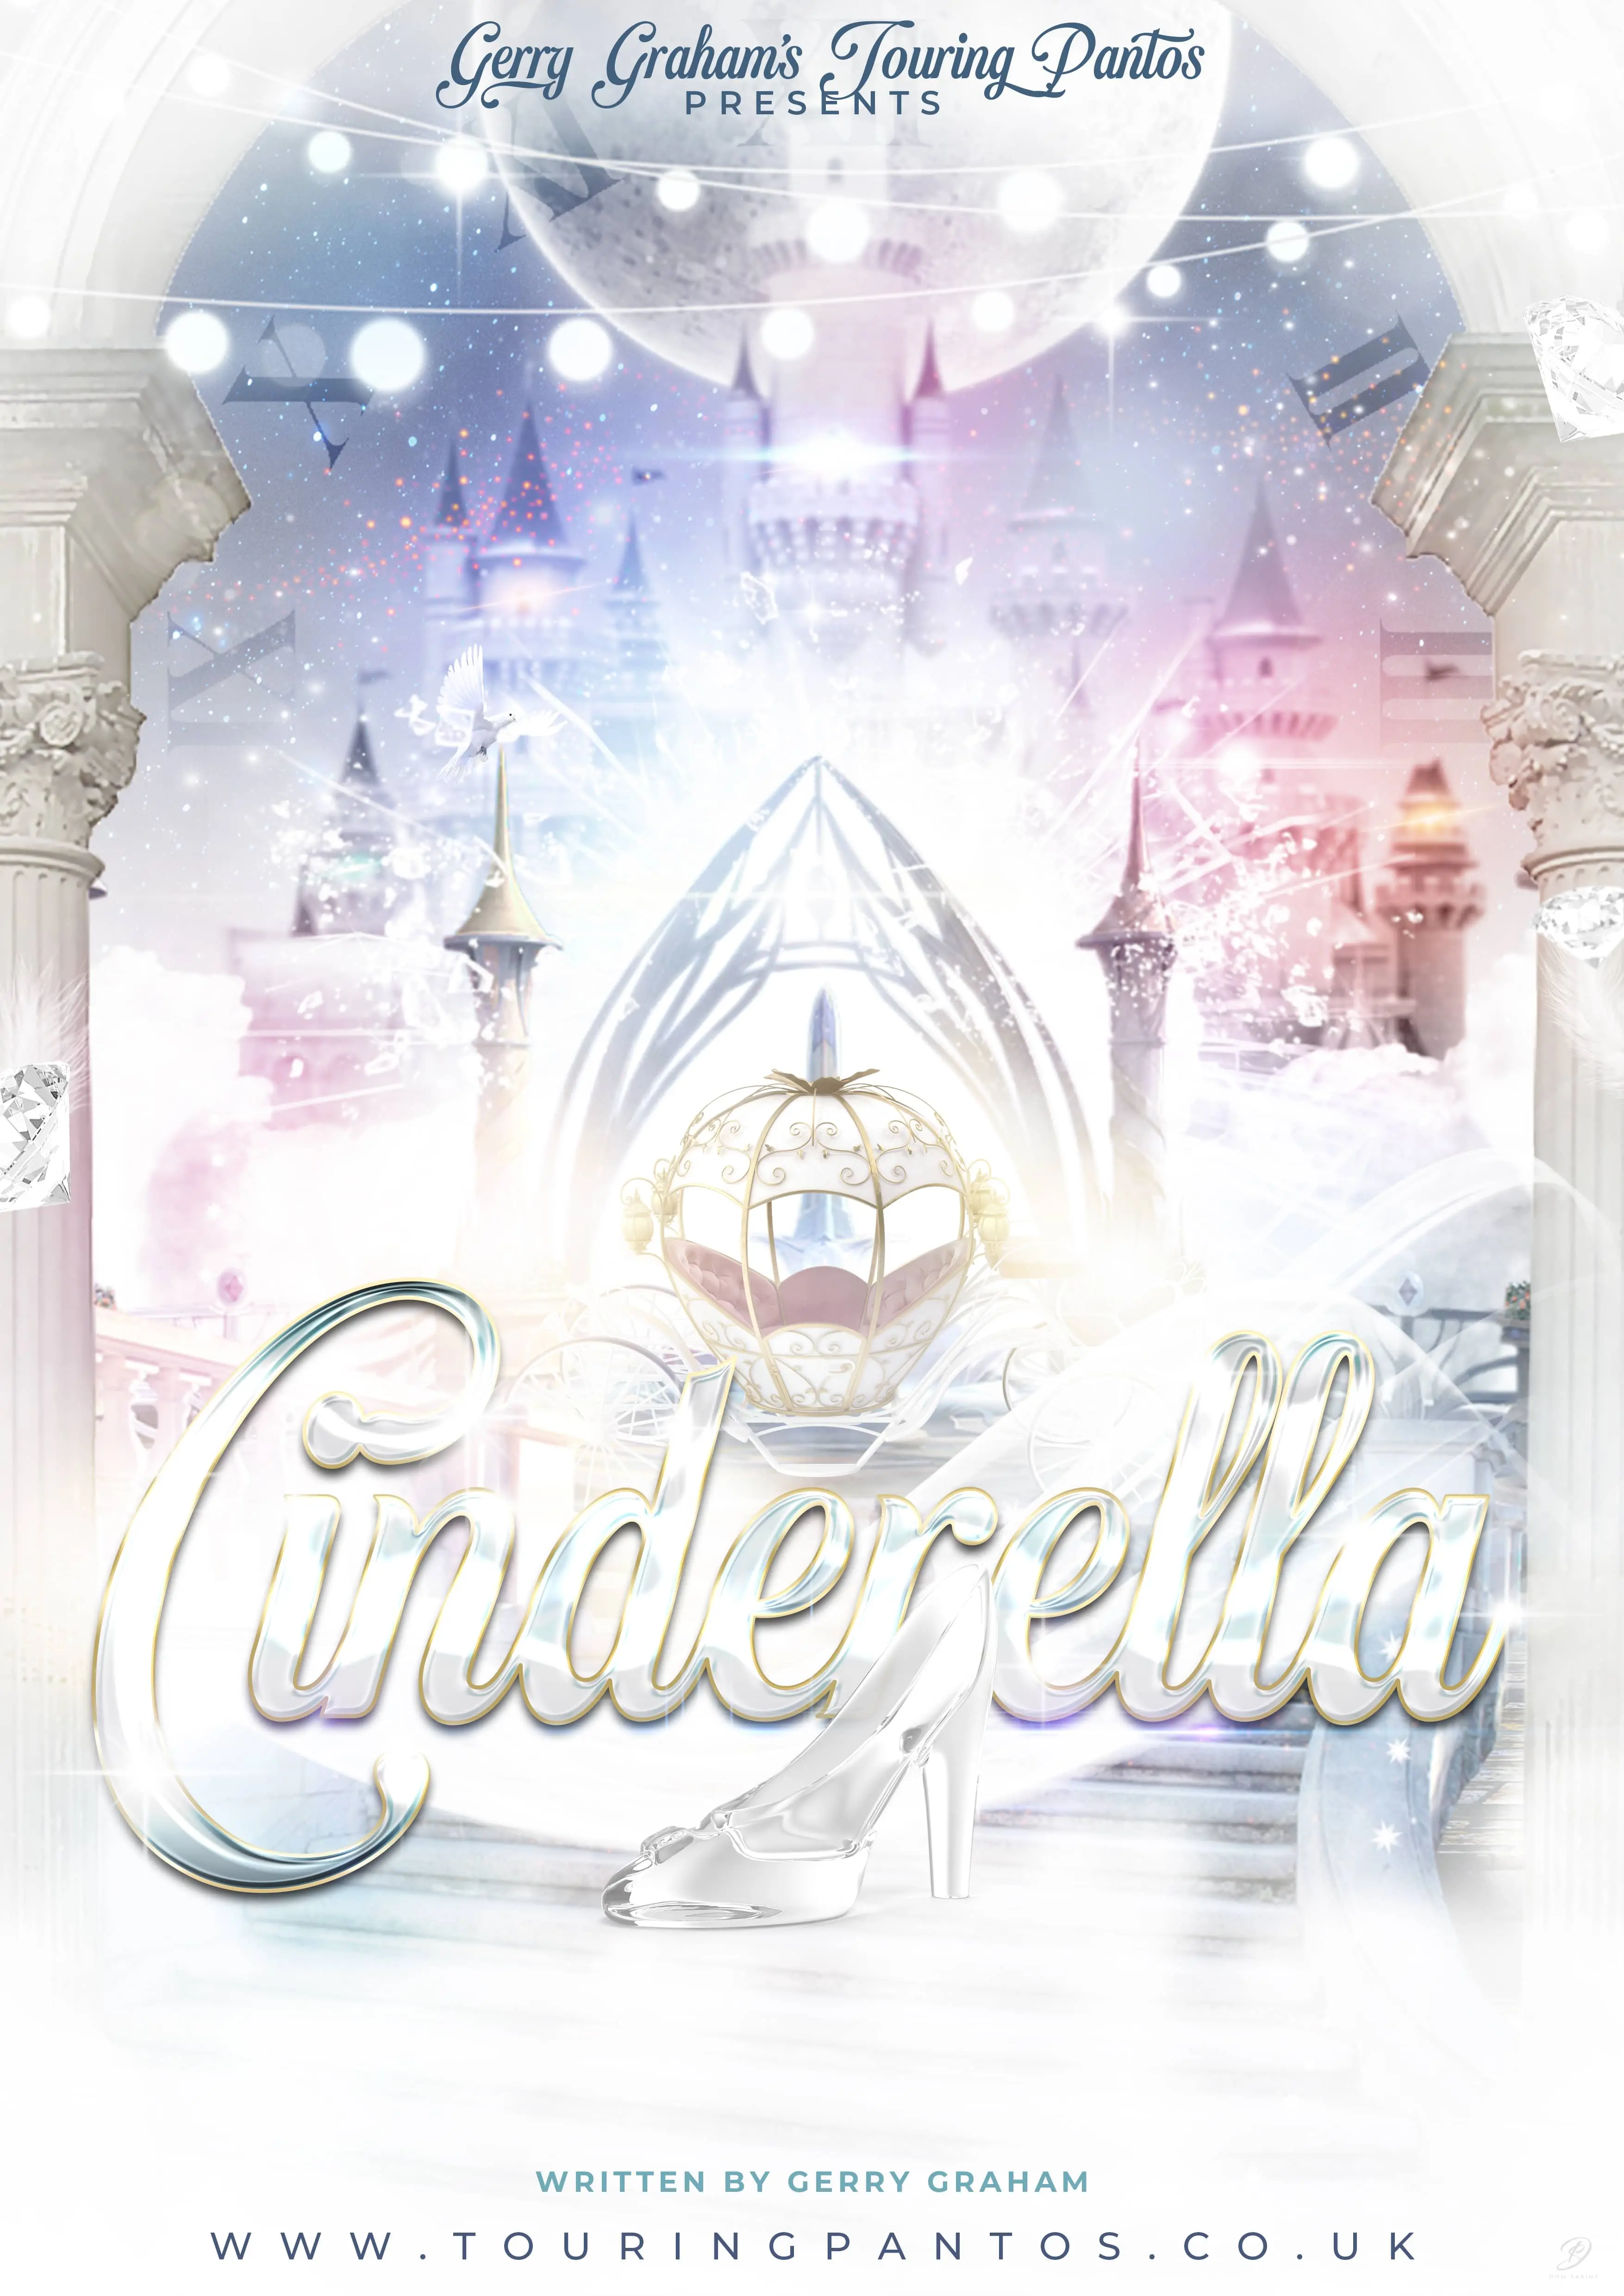 Cinderella touring panto